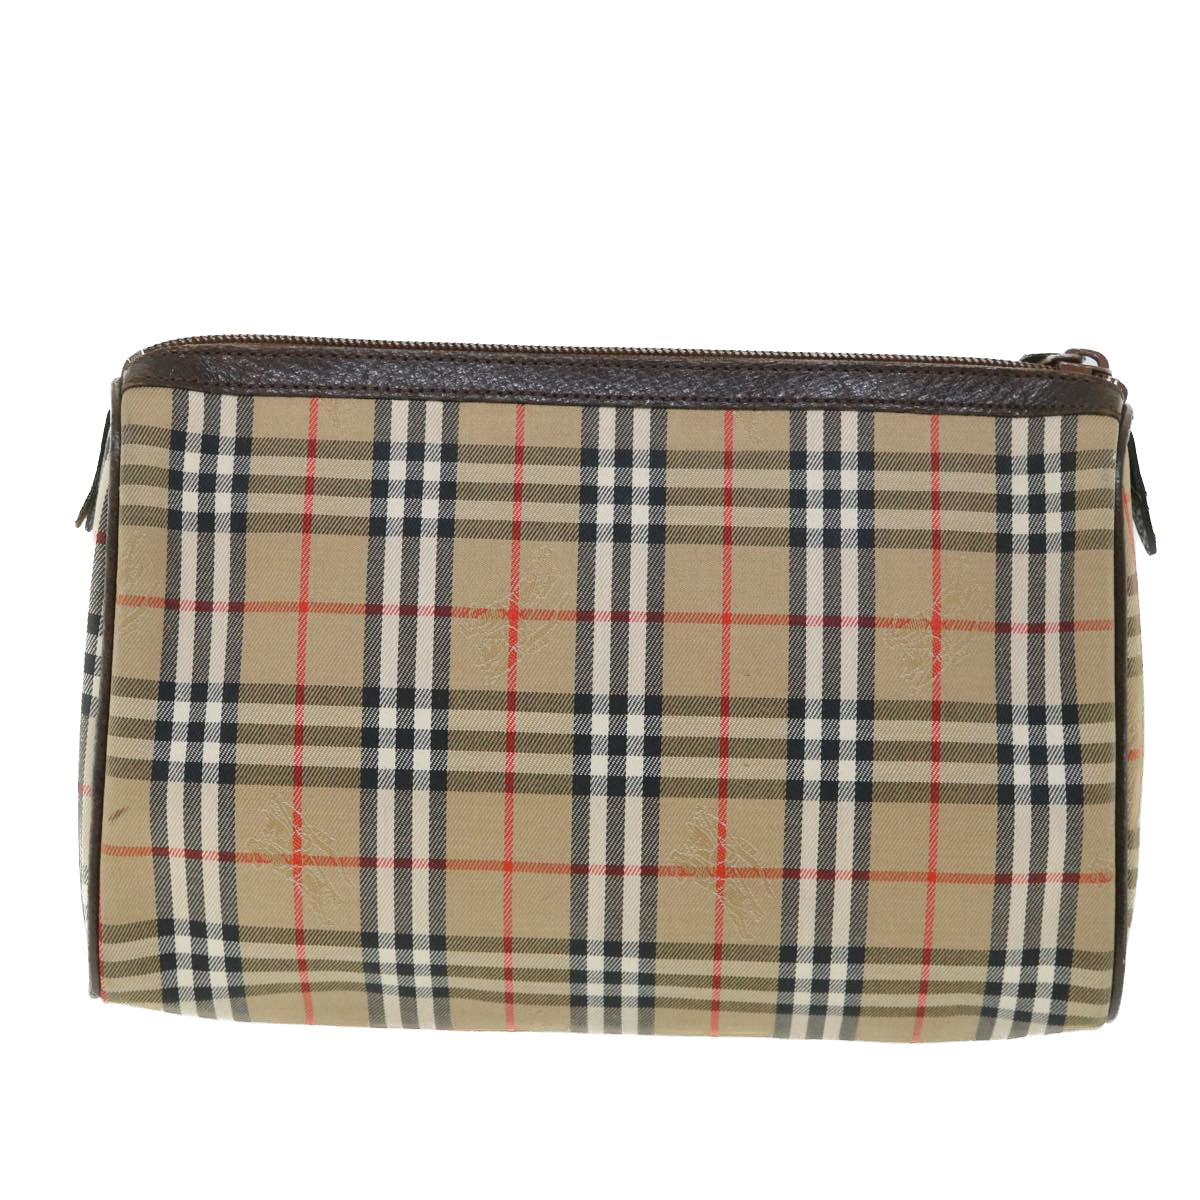 Burberrys Nova Check Clutch Bag Canvas Leather Beige Brown Auth 54952 - 0